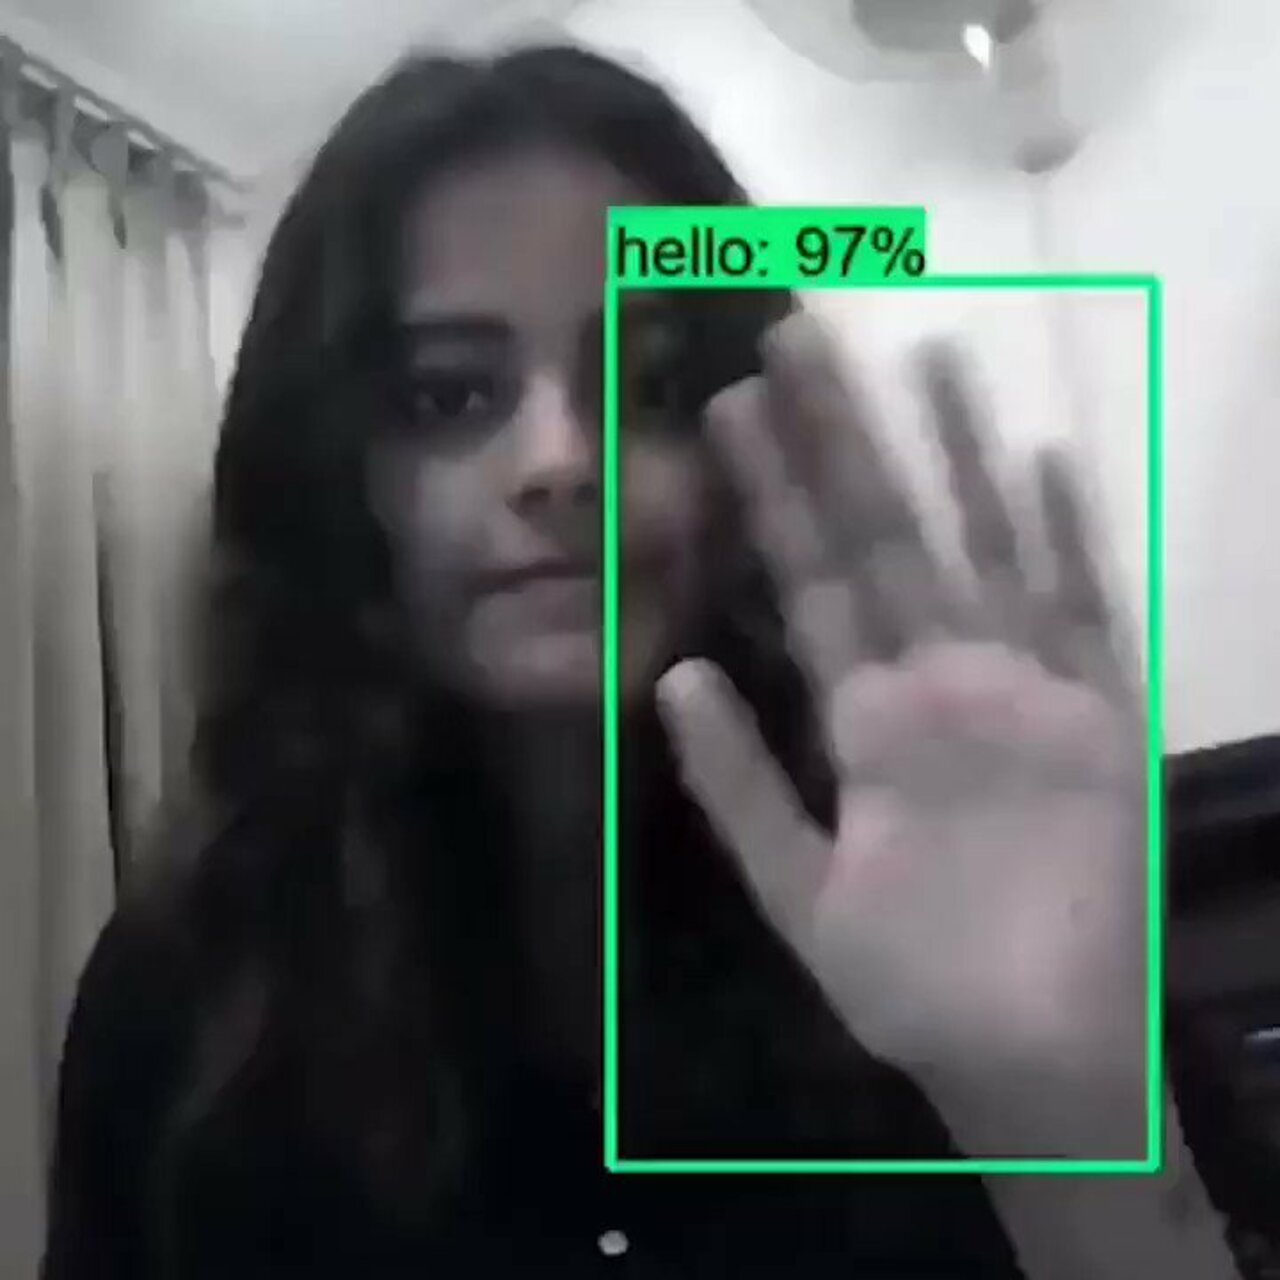 Translating Sign Language in Real Time via @pascal_bornet #AI #ArtificialIntelligence #Innovation #MachineLeaning #TechForGood cc: @maxjcm @ronald_vanloon @marcusborba https://t.co/MAPbVe4O3U